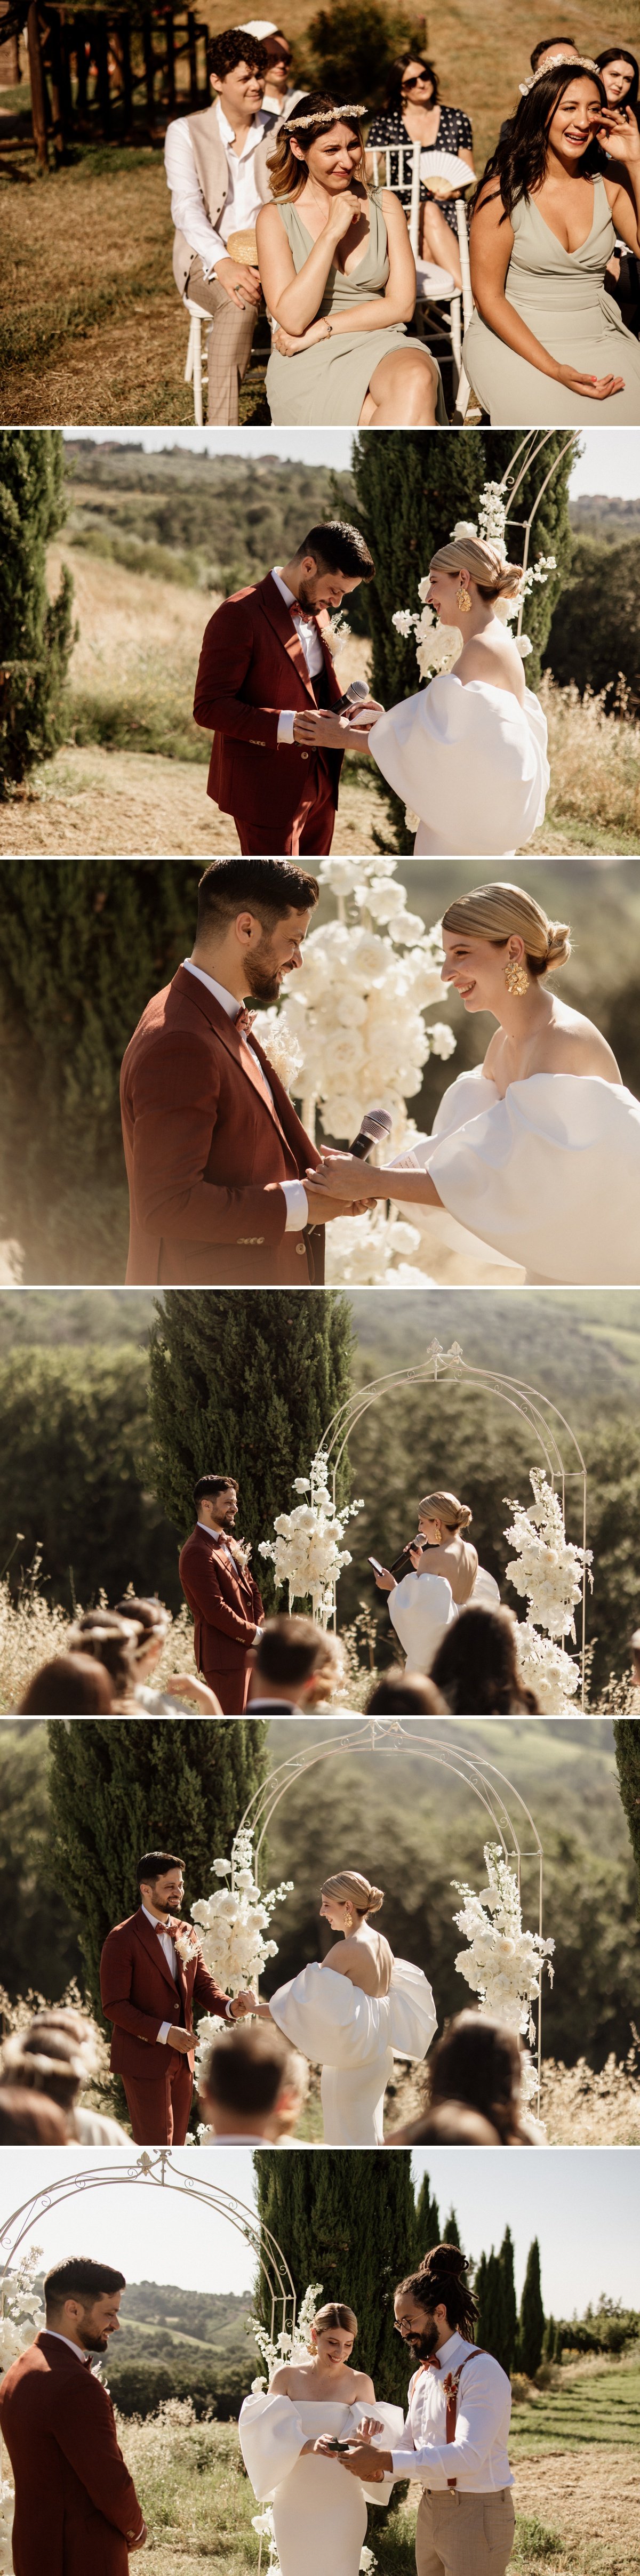 tuscany-wedding-dallk-12.jpg